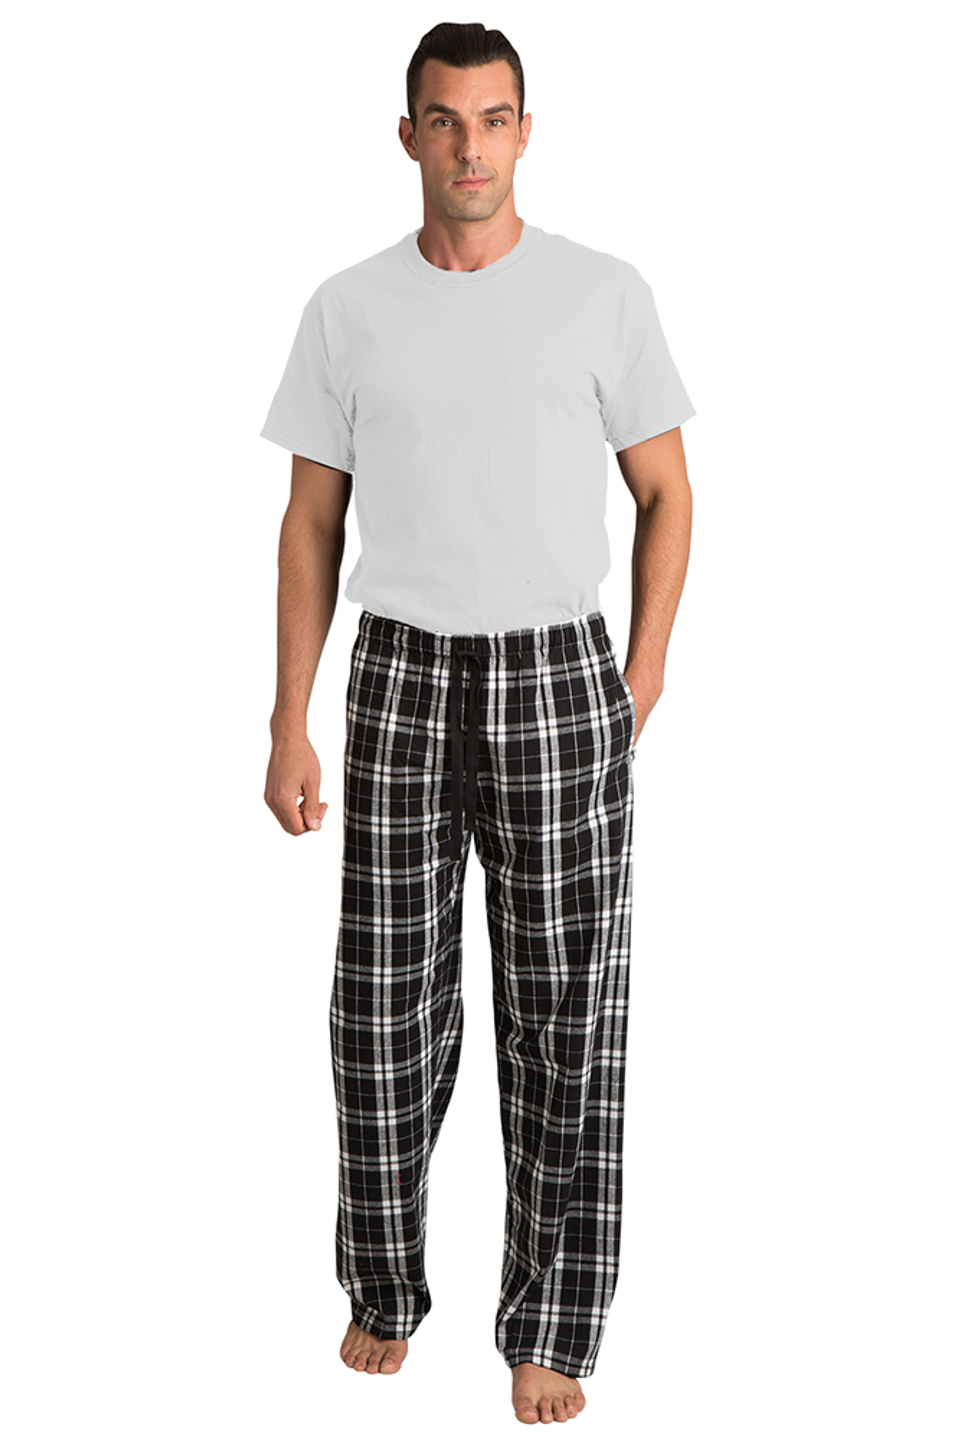 Men's Personalized Custom Print Flannel Pajama Pants | ZYNOTTI